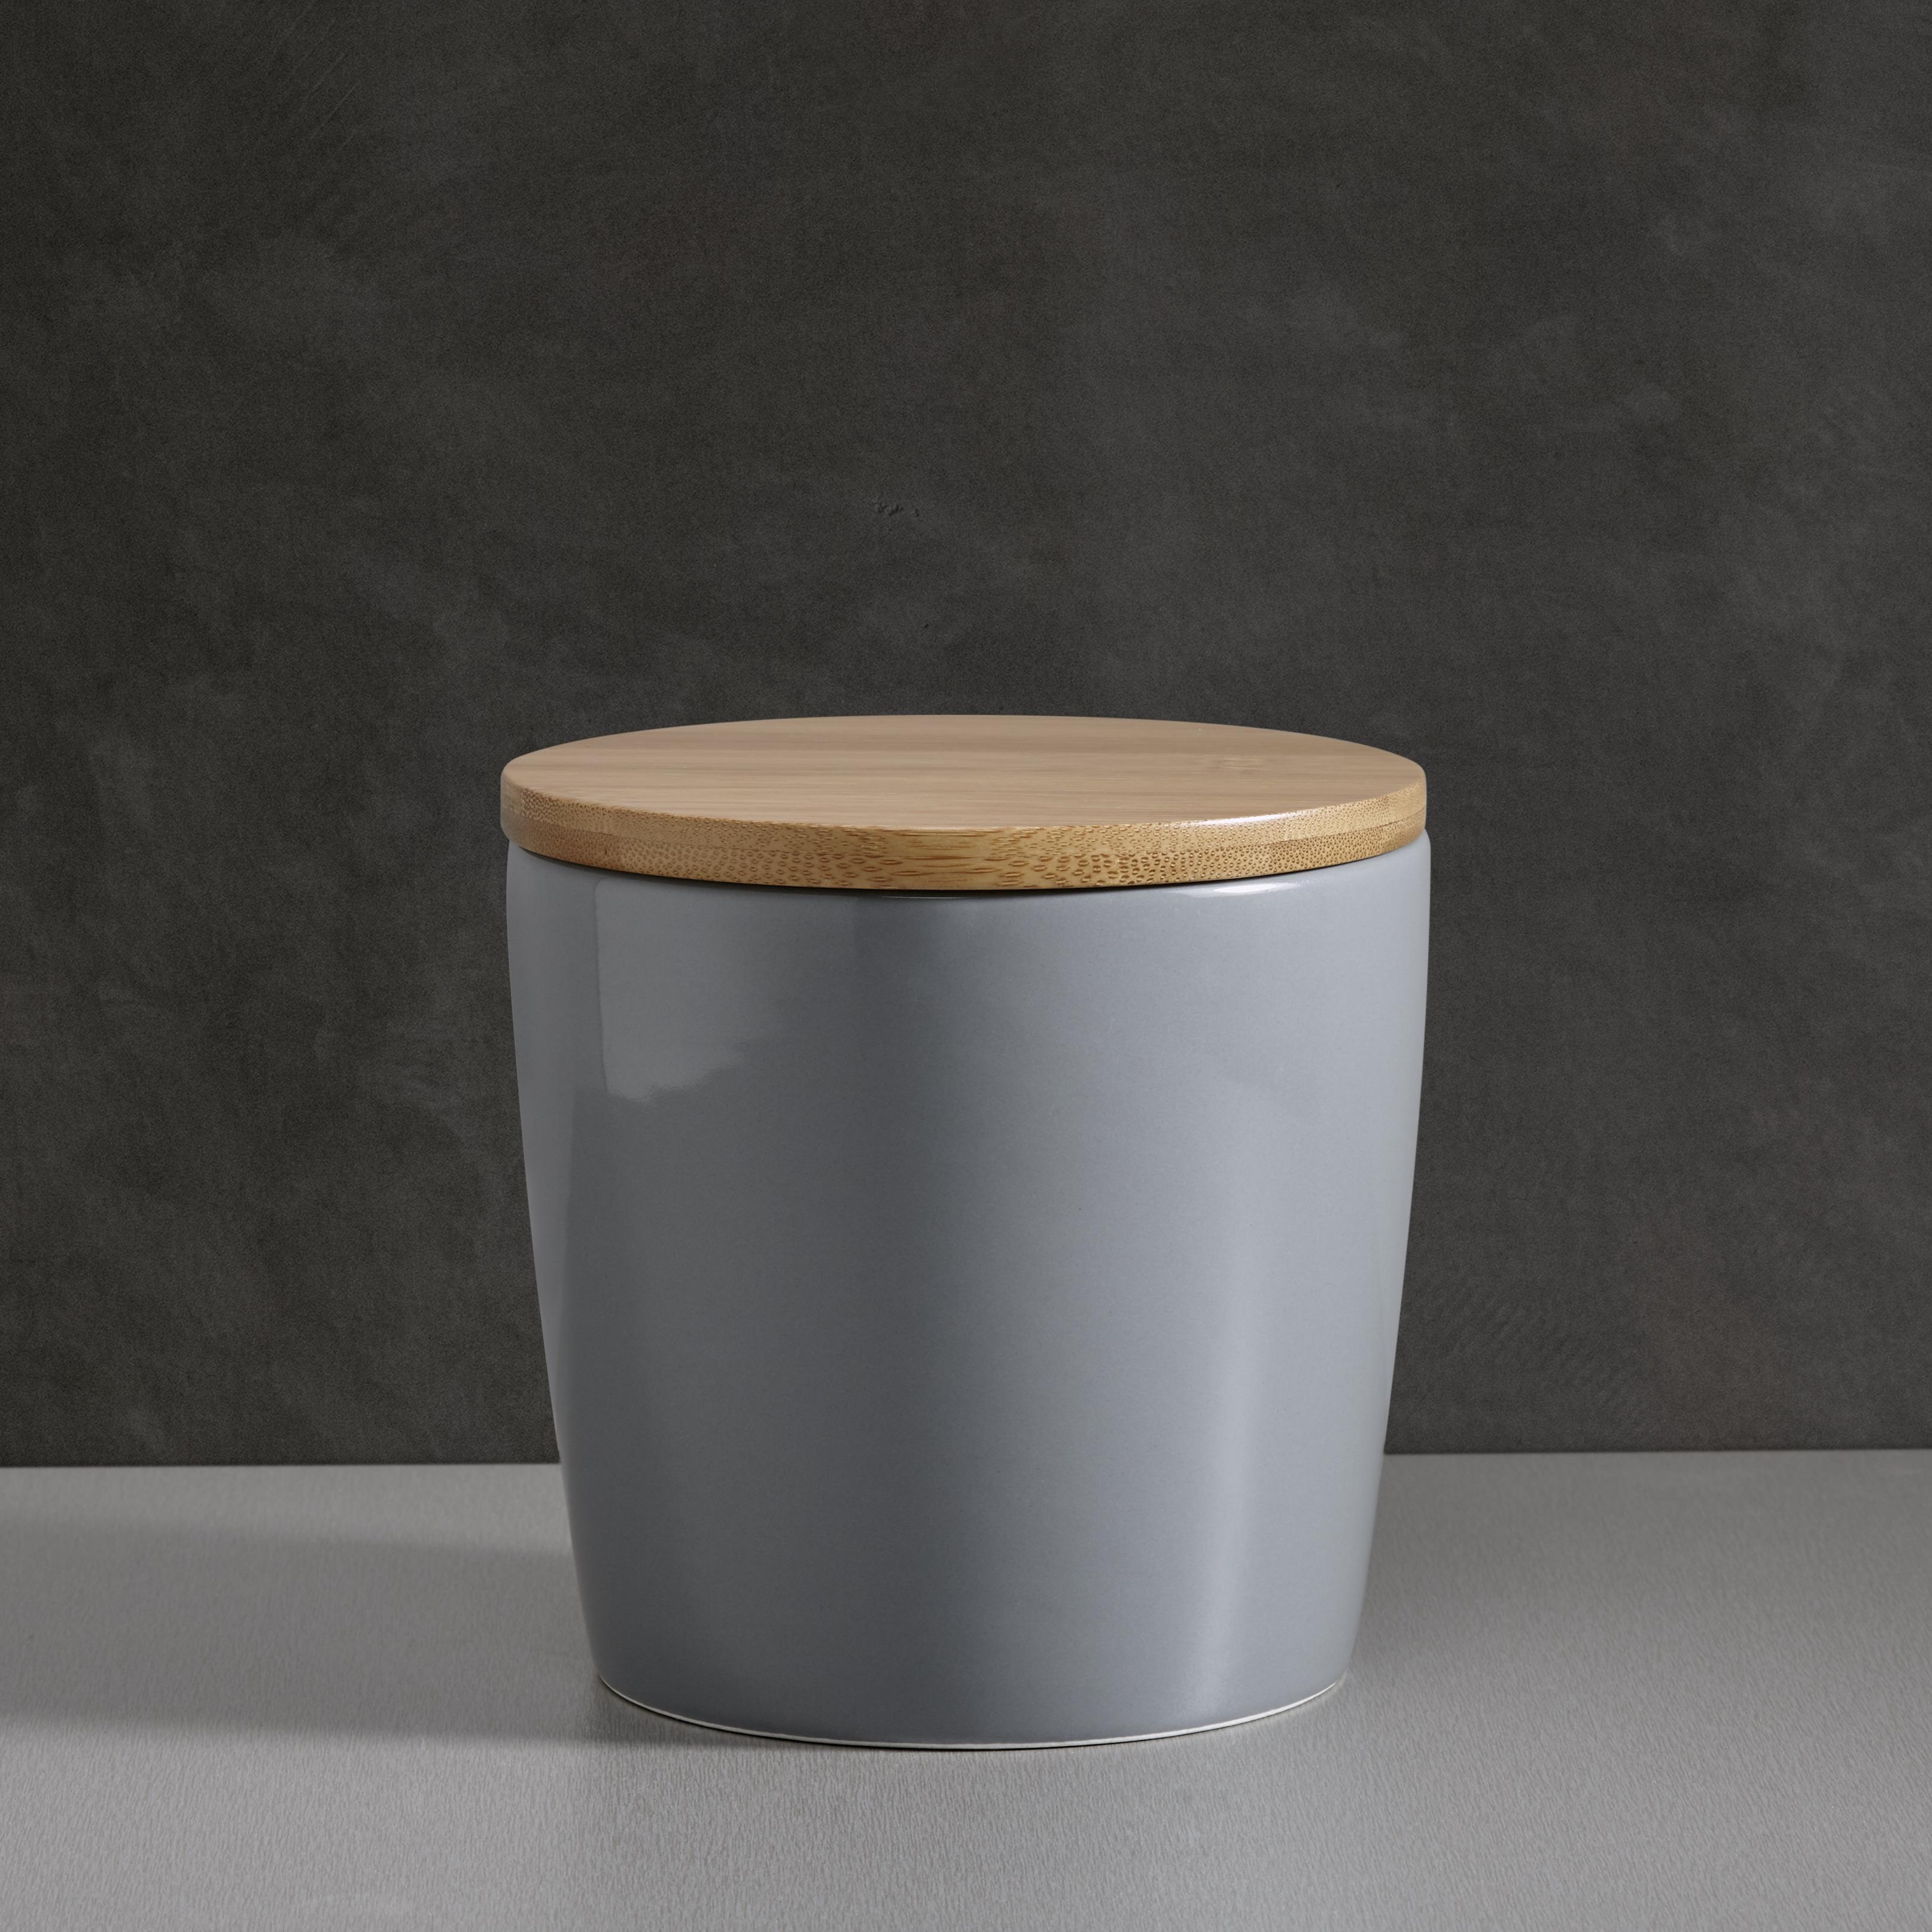 Porzellandose Haku mit Deckel, H ca. 13 cm - Naturfarben/Grau, MODERN, Holz/Keramik (13/13cm) - Bessagi Home